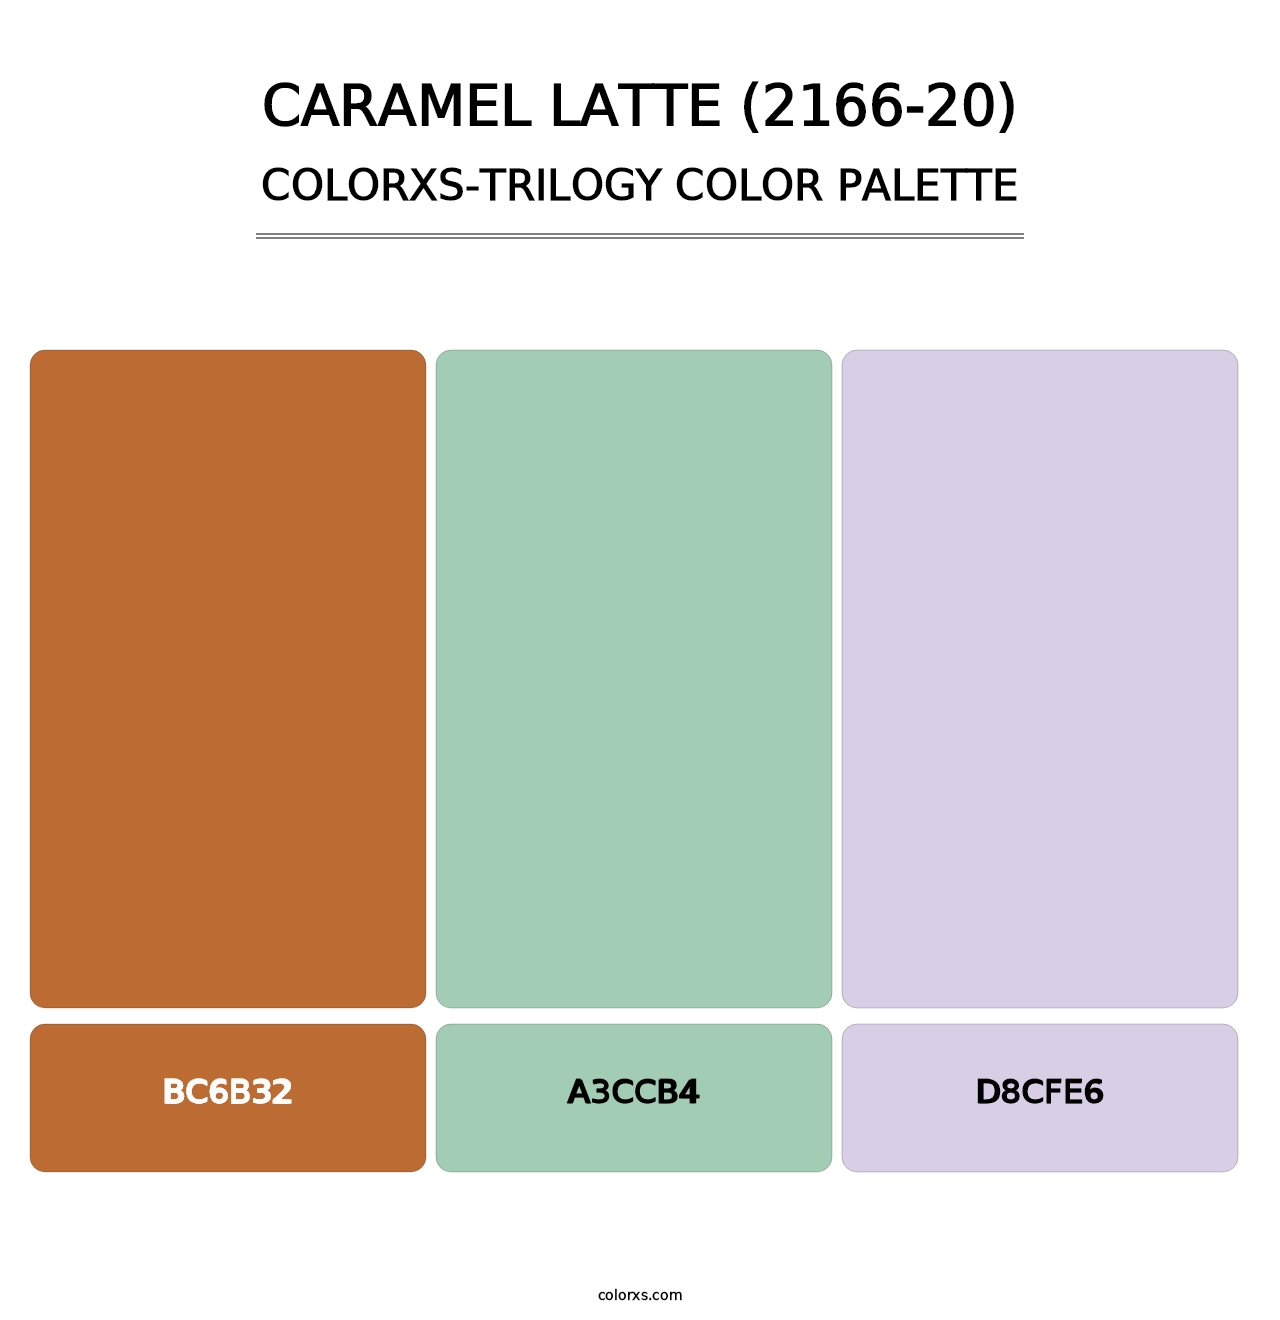 Caramel Latte (2166-20) - Colorxs Trilogy Palette